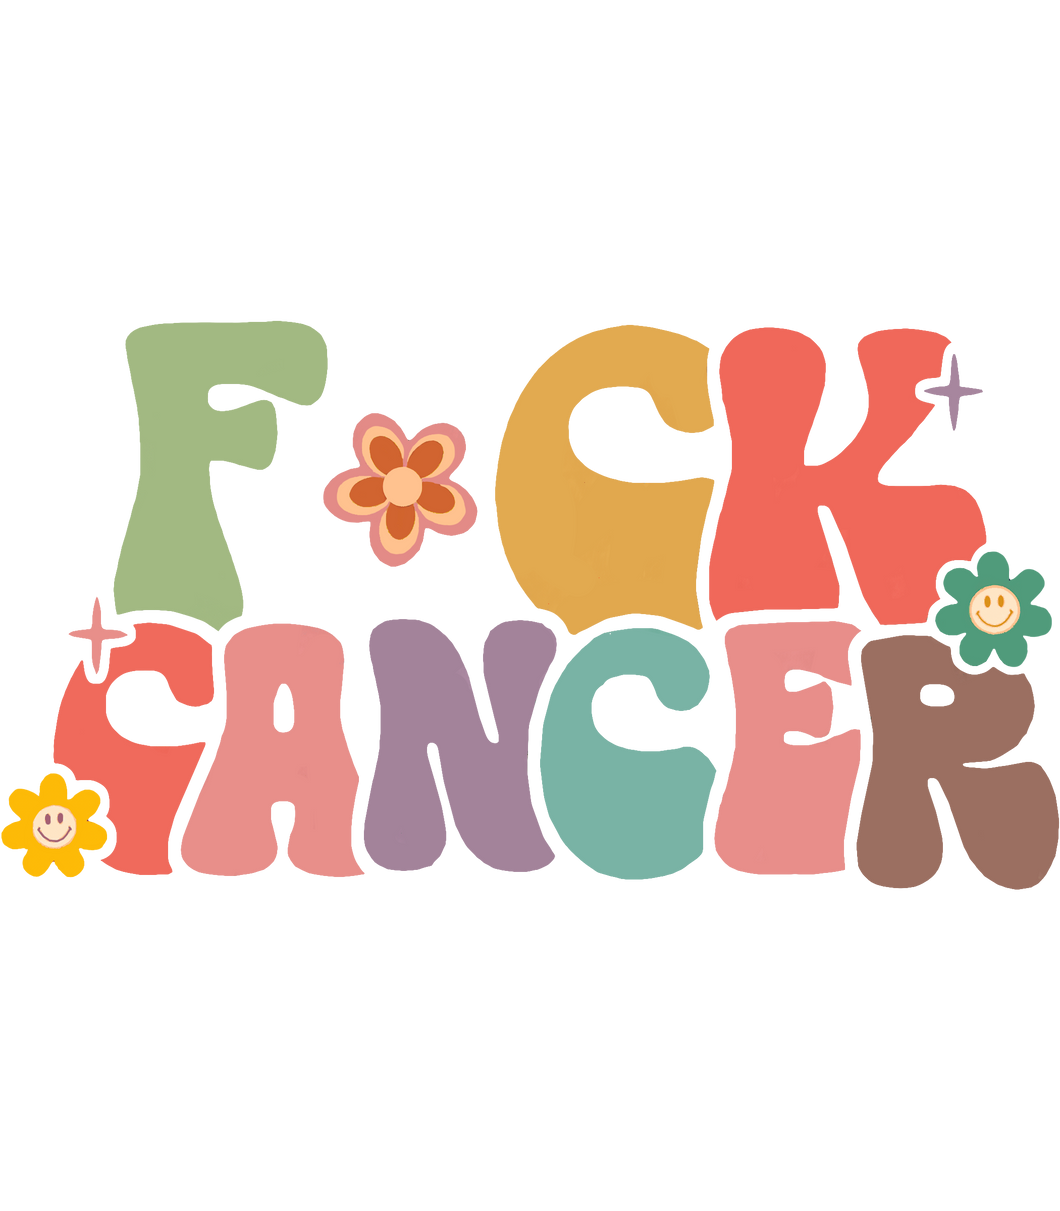 Cancer Awareness T-shirts/Sweatshirt/Hoodie